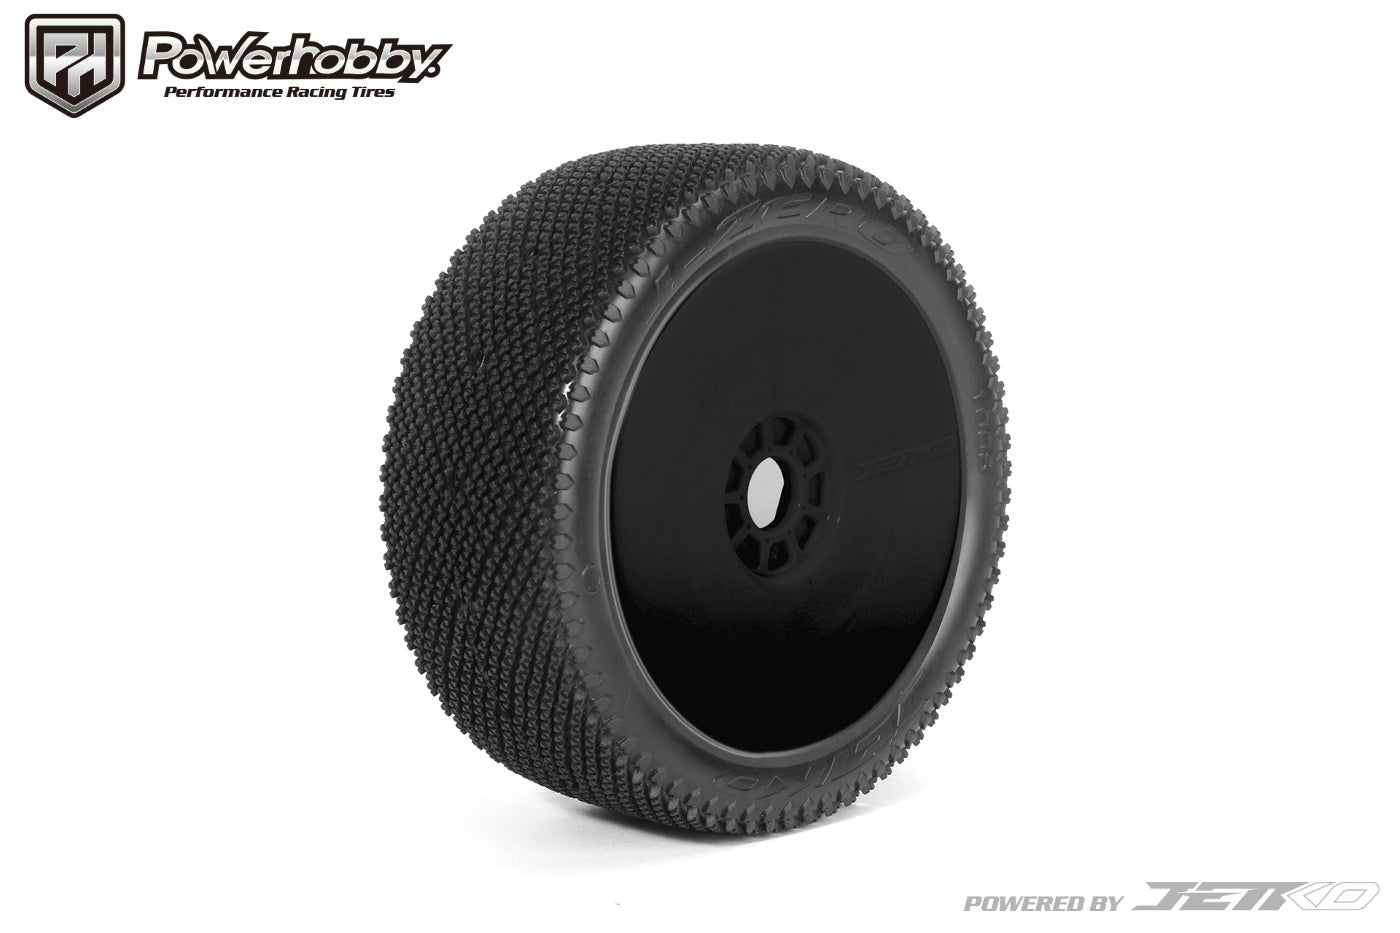 Powerhobby J-Zero 1/8 Buggy Mounted Tires Black Dish Wheels (2) Super Soft - PowerHobby